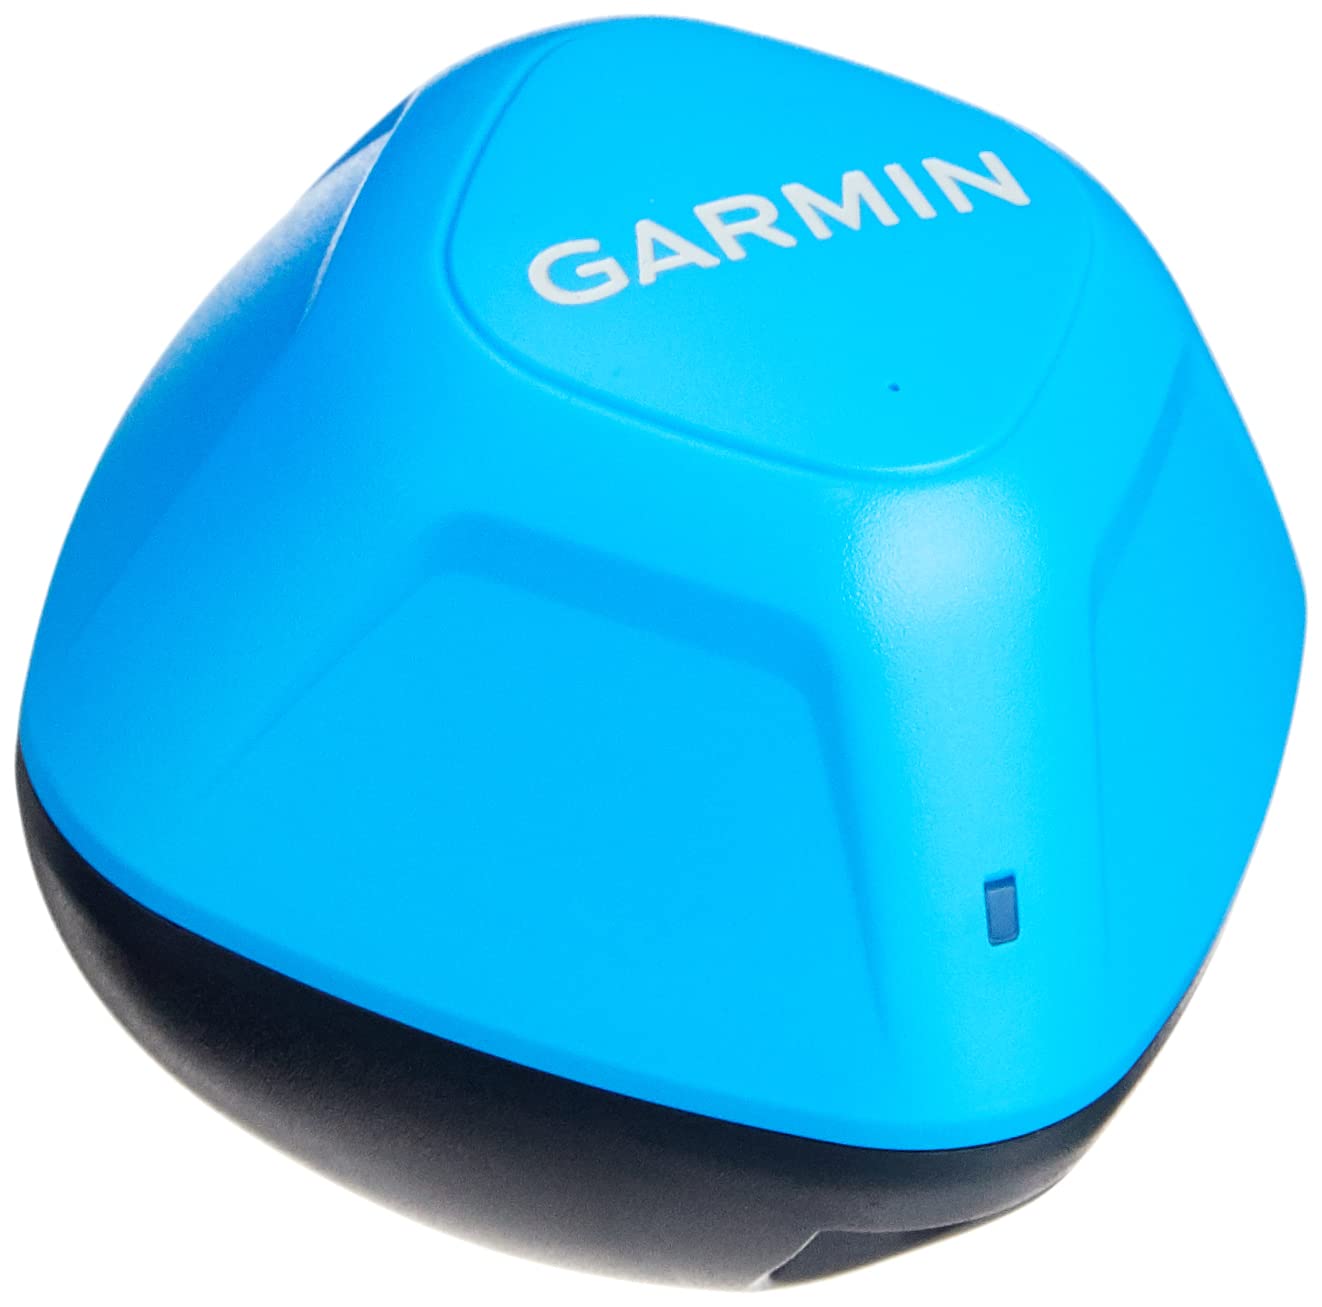 Garmin Striker Cast fish finder, Castable Sonar with GPS $129.99 Amazon.com